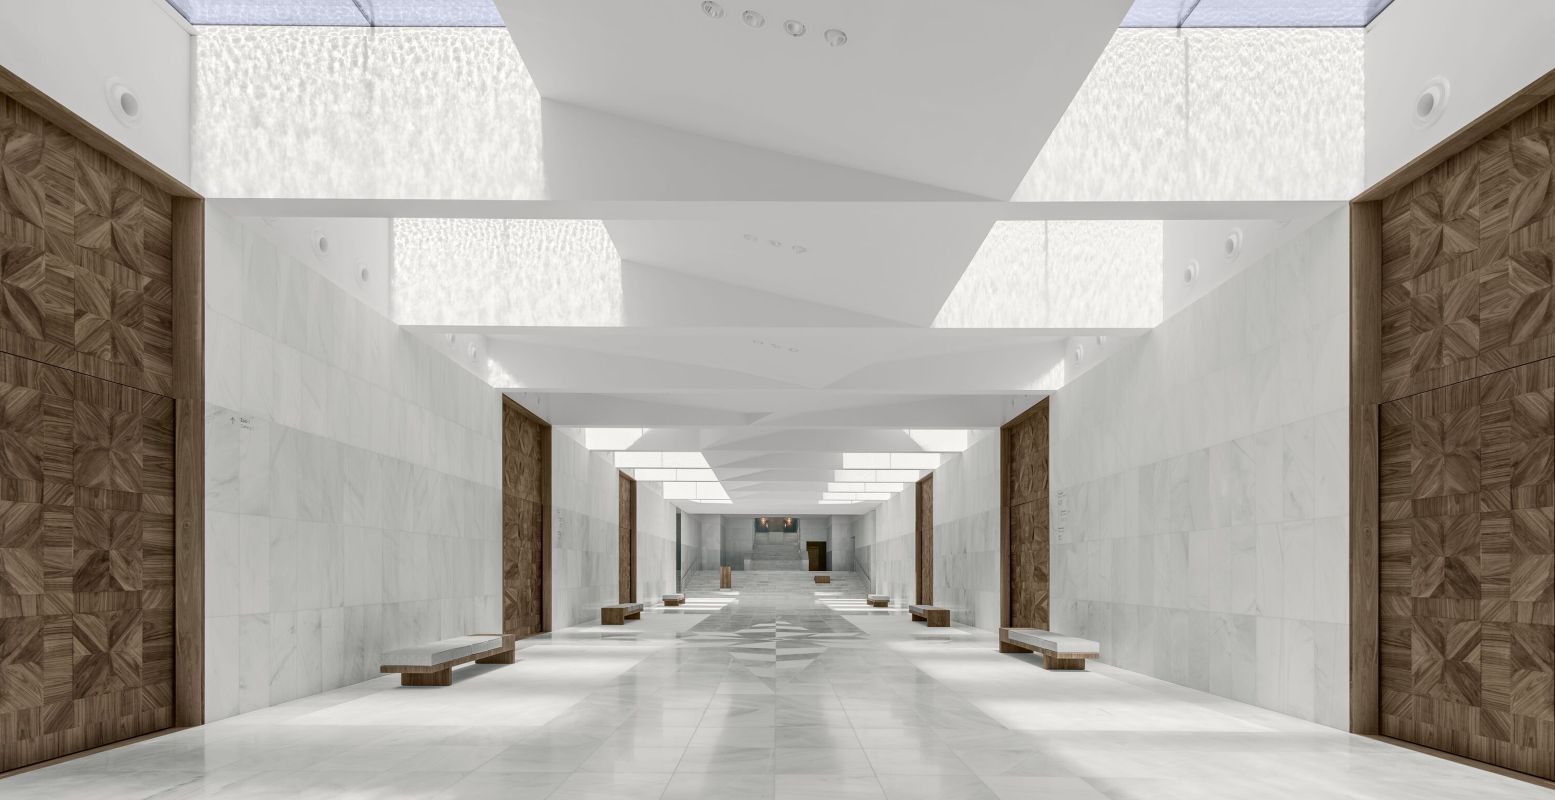 De grand foyer verbindt het bestaande paleis met het nieuwe gedeelte. Foto: © Paleis Het Loo